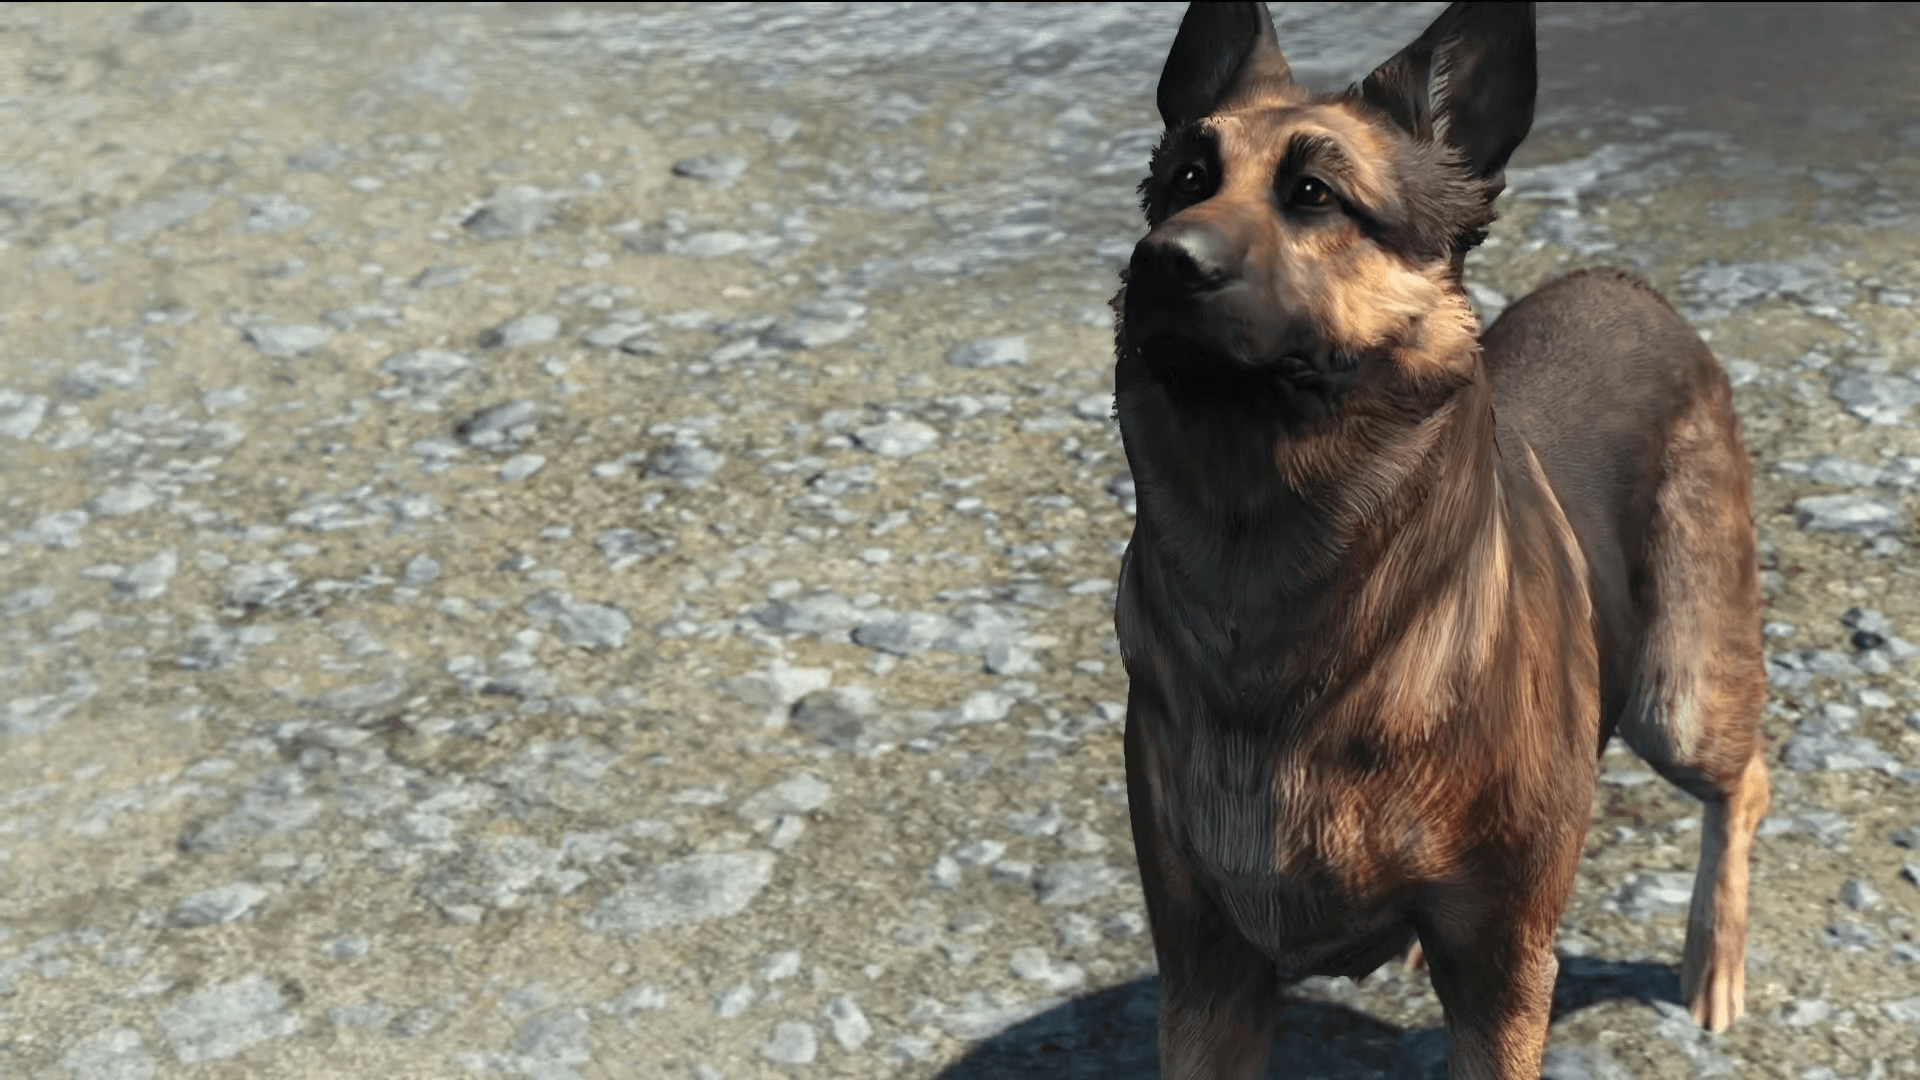 Fallout 4 companion perks